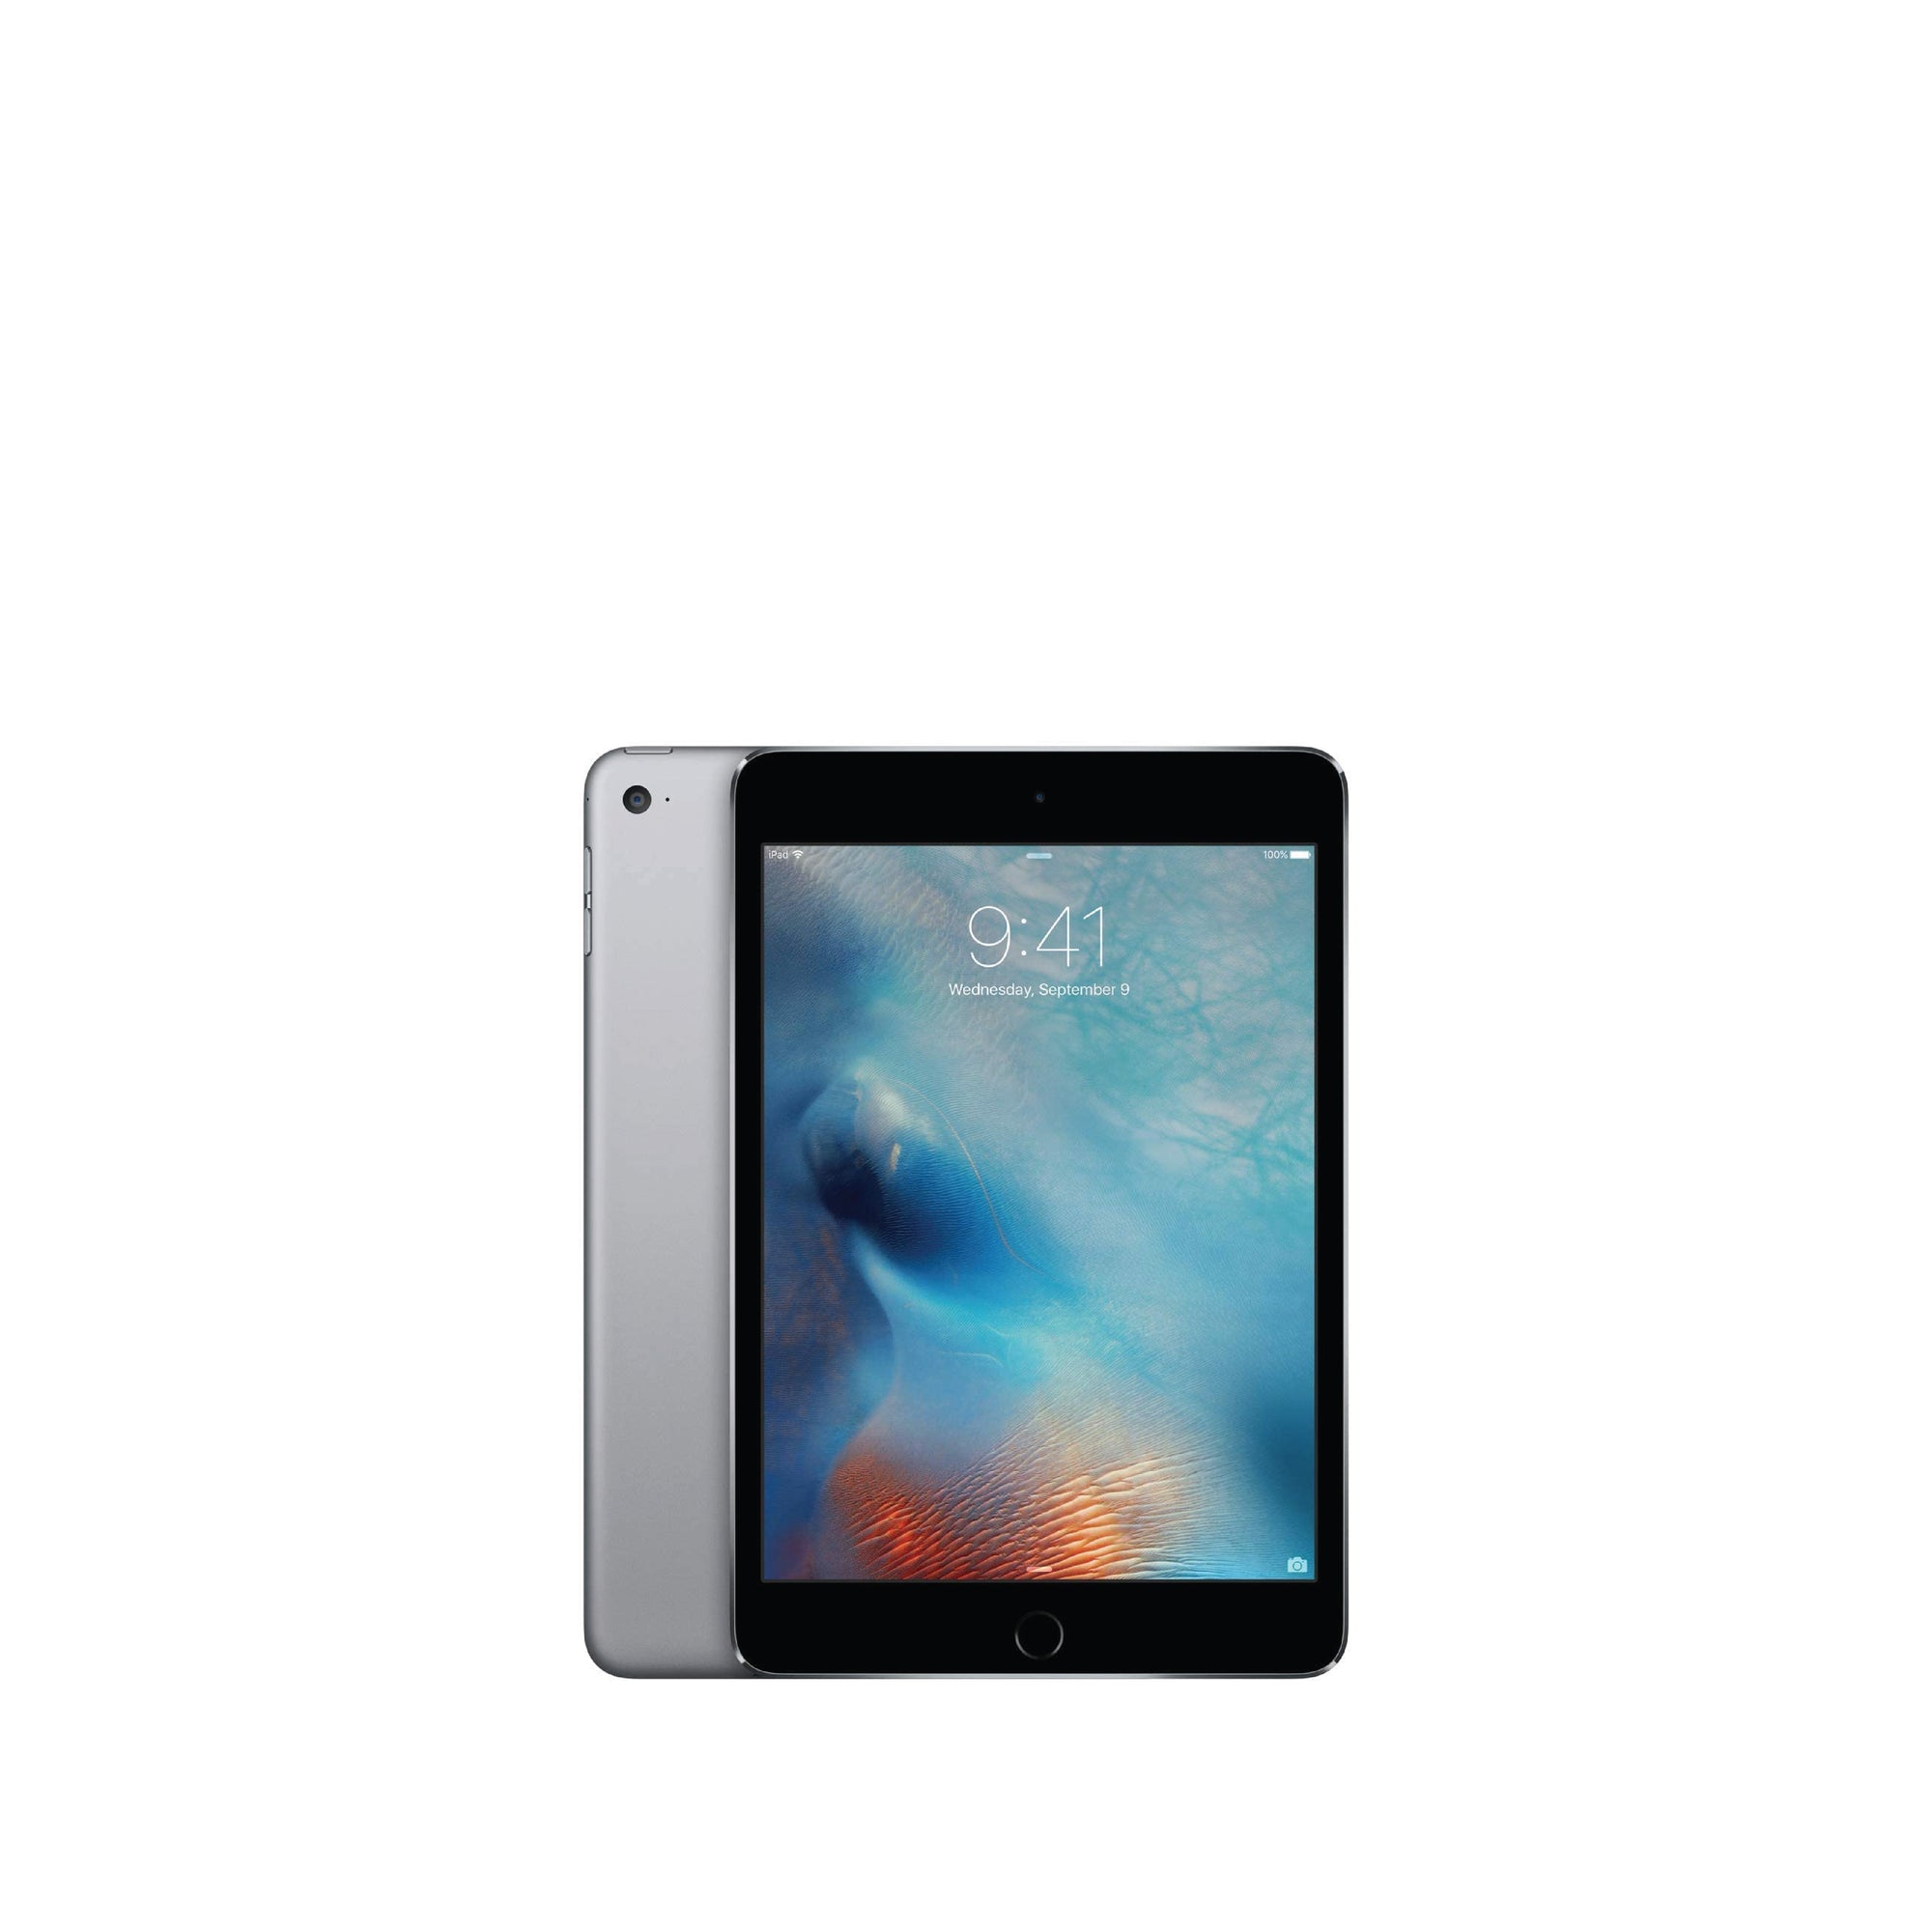 iPad Mini 4th Gen Battery Replacement